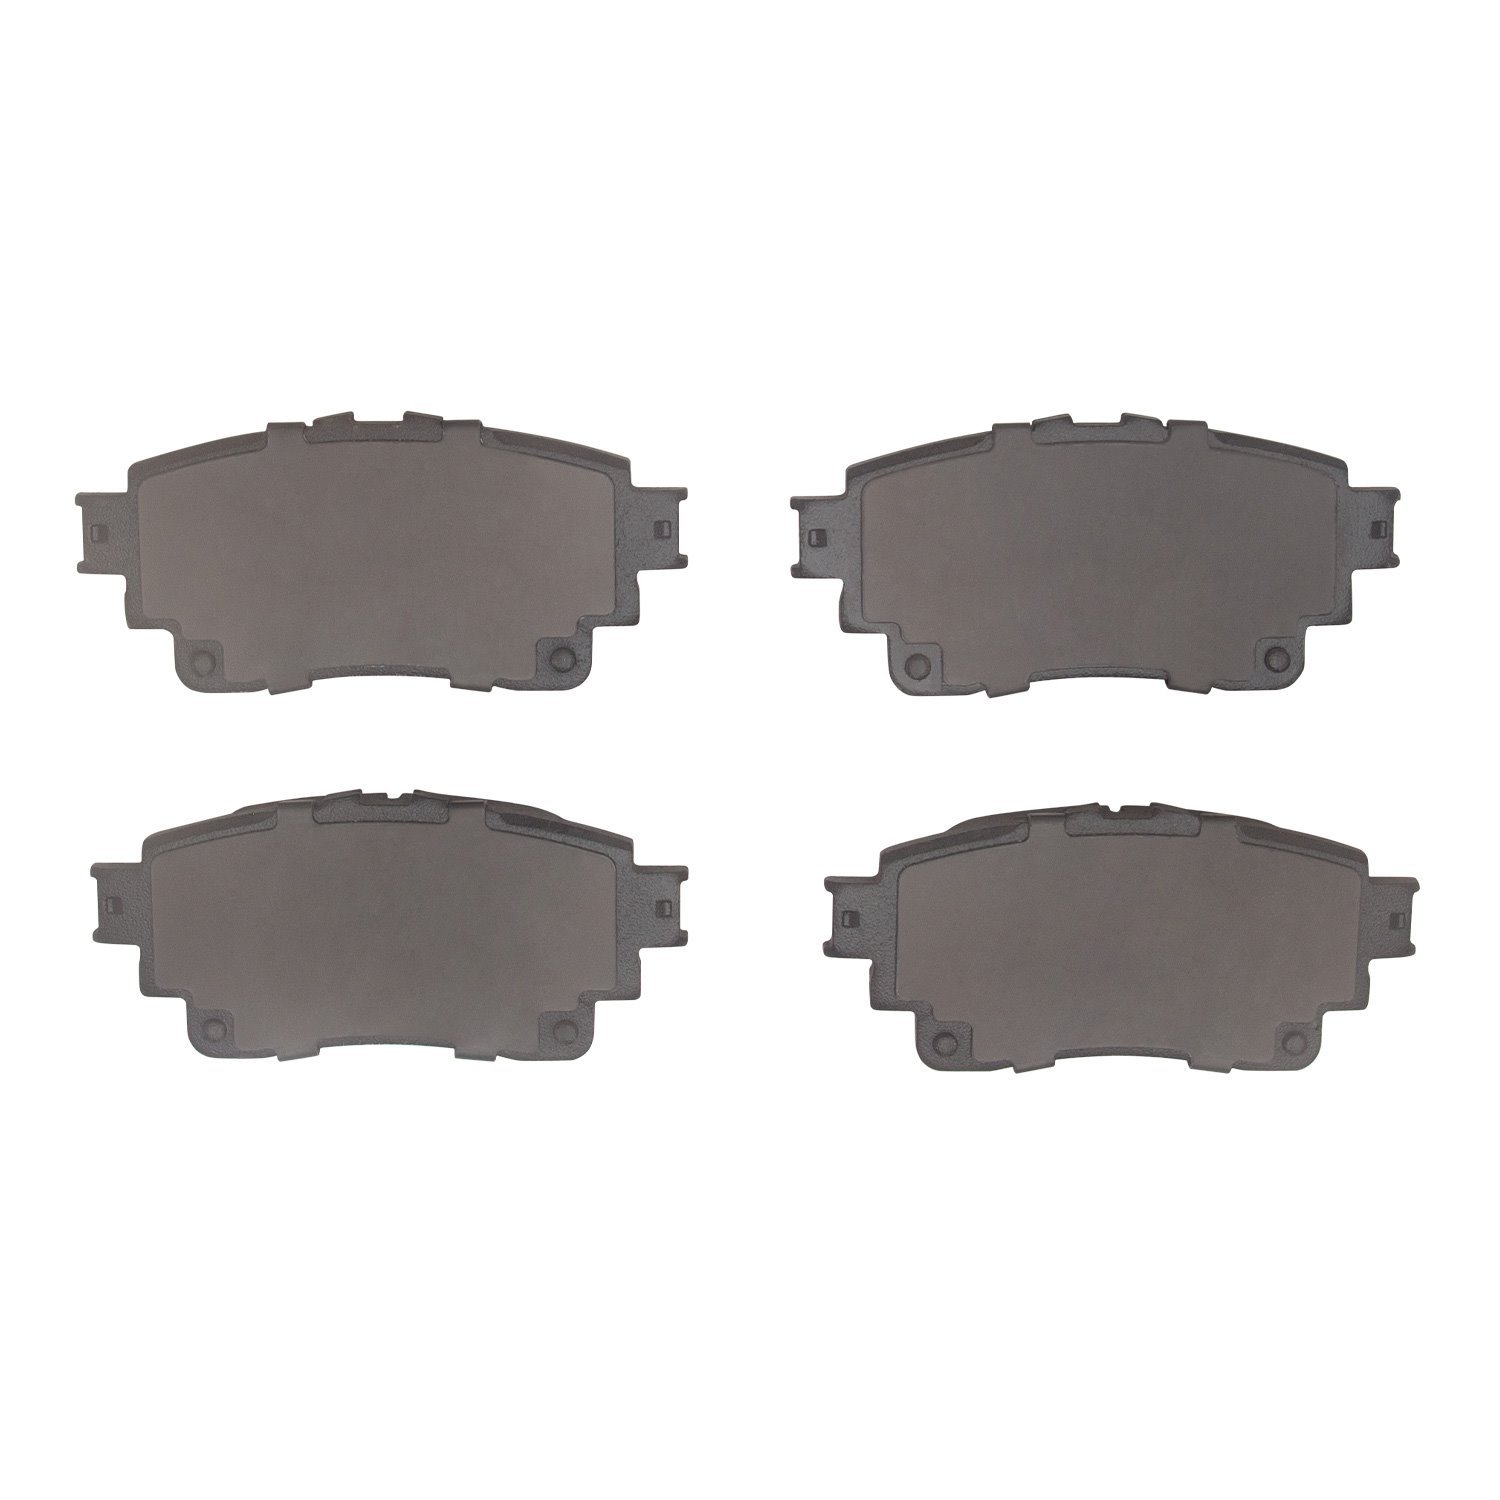 1310-2183-00 3000-Series Ceramic Brake Pads, Fits Select Lexus/Toyota/Scion, Position: Rear